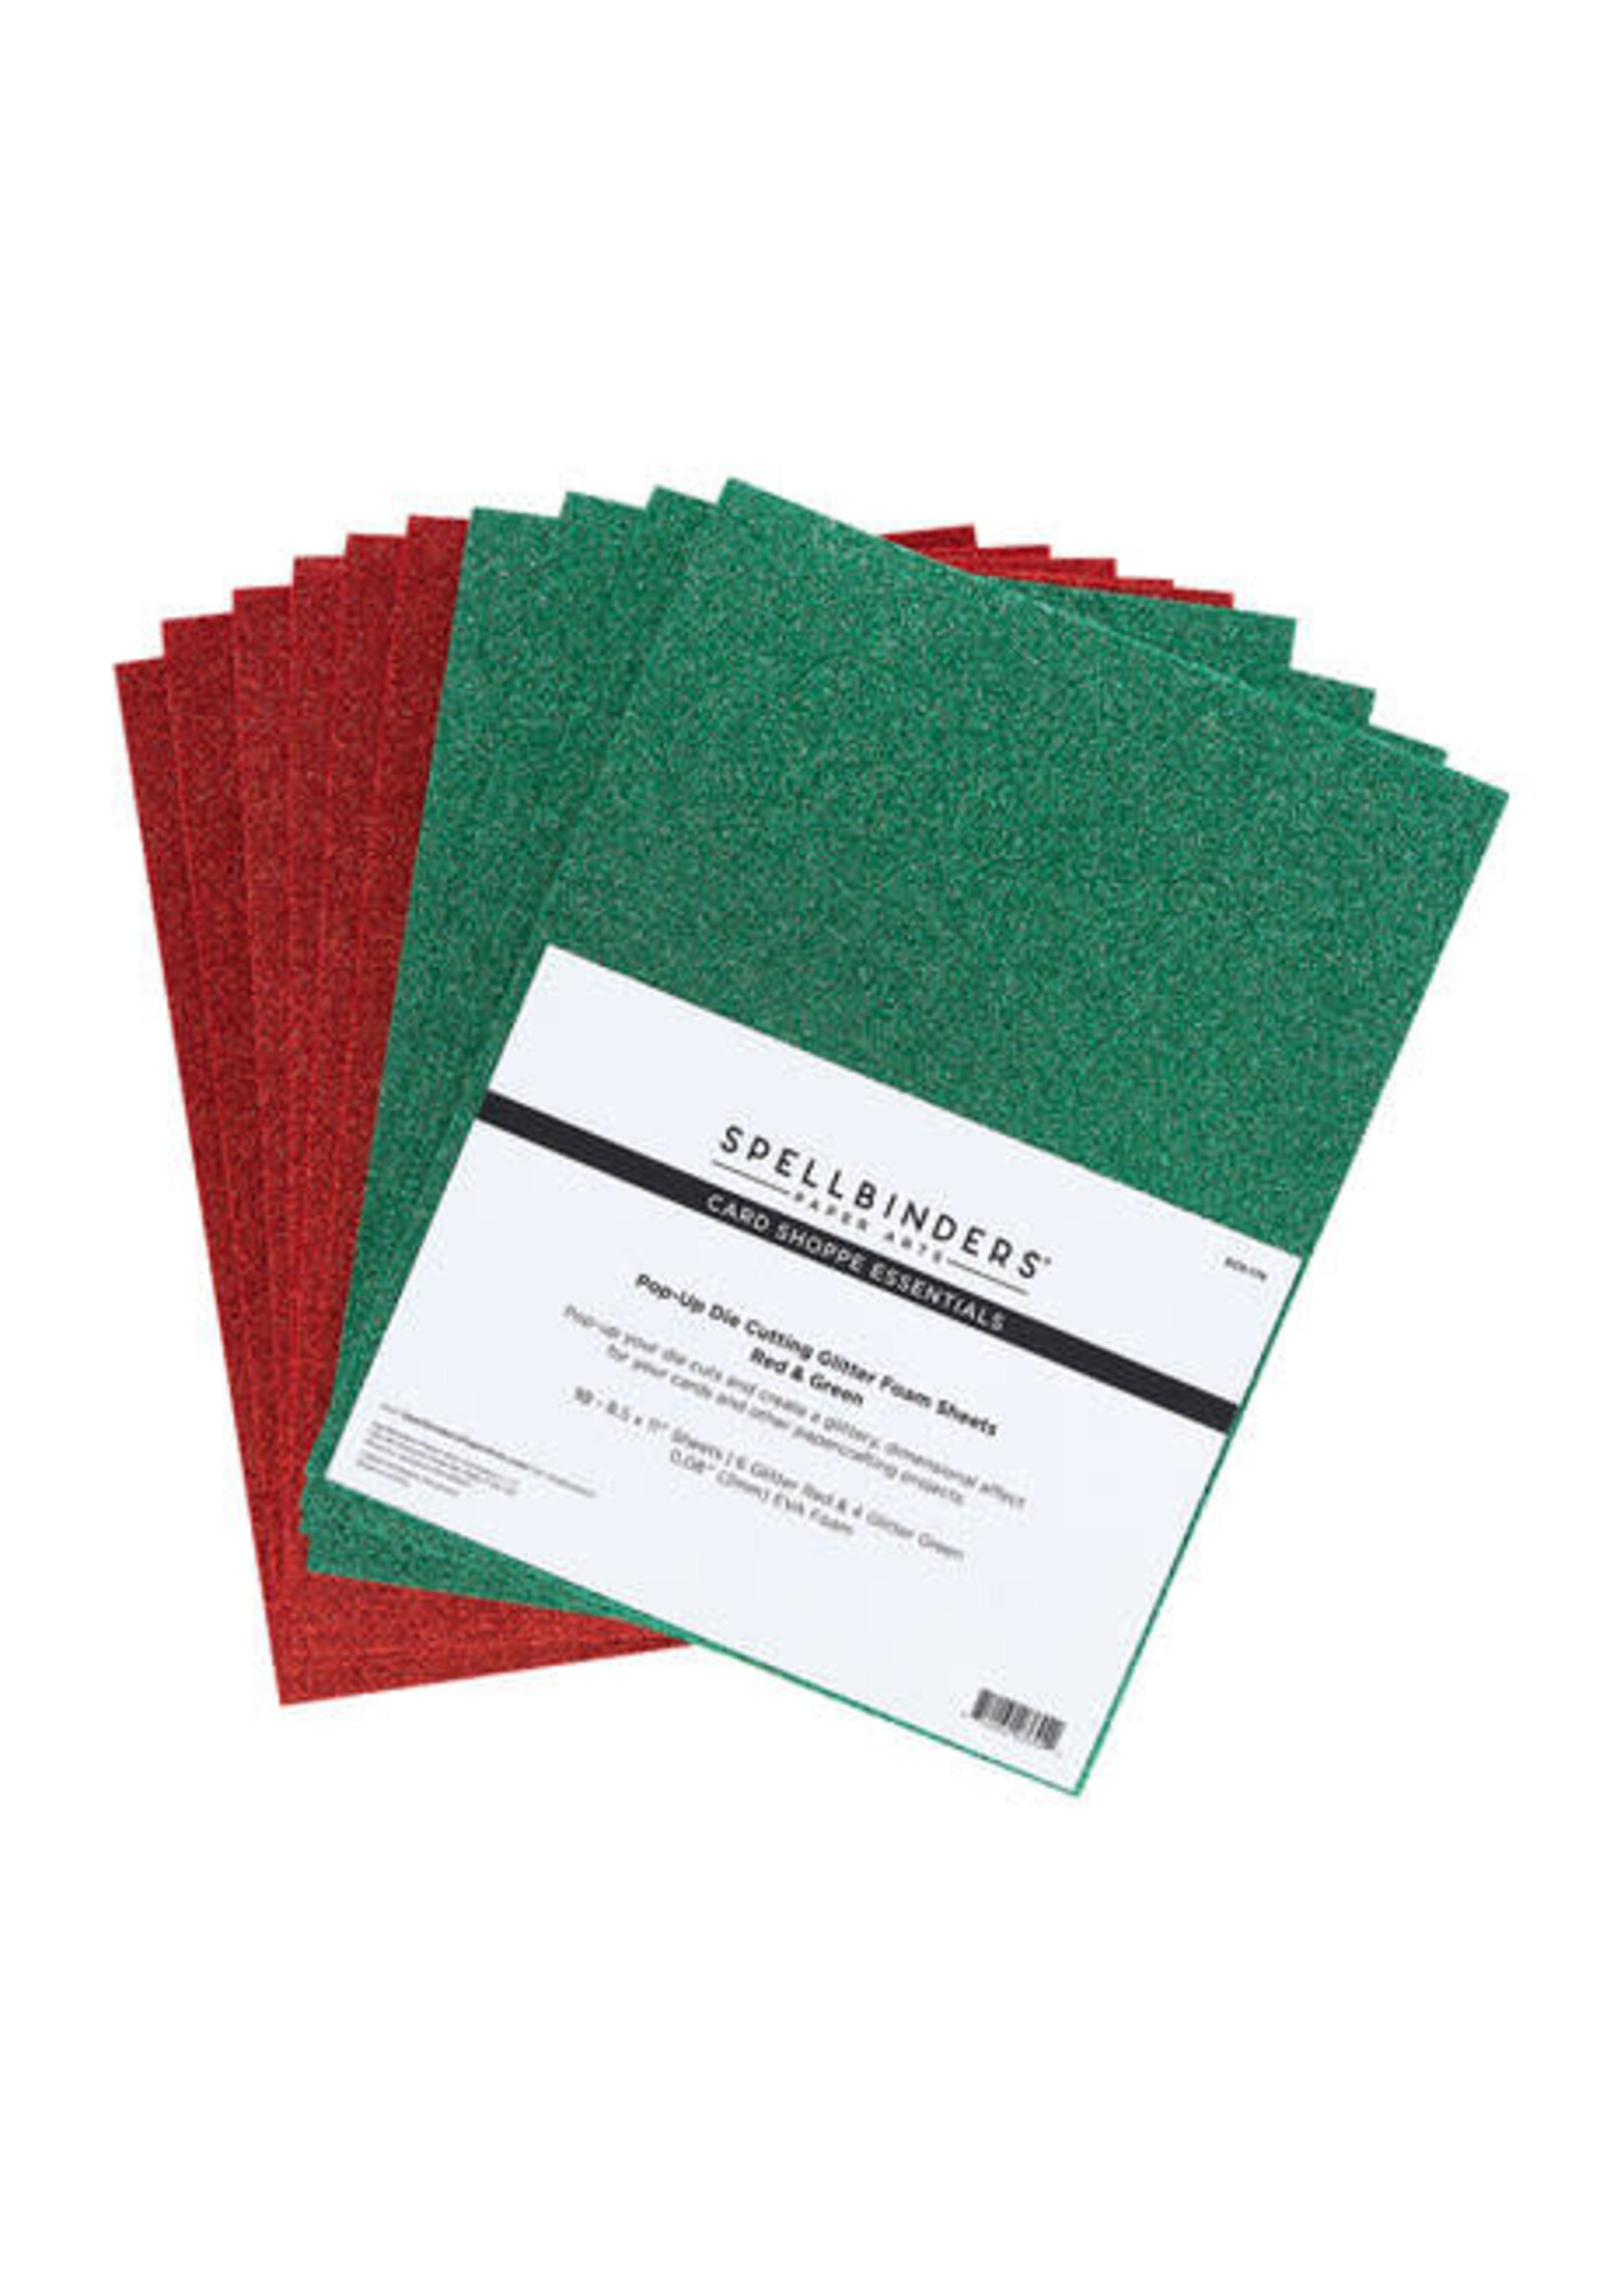 spellbinders Pop-Up Die Cutting Glitter Foam Sheets Red & Green (SCS-174)